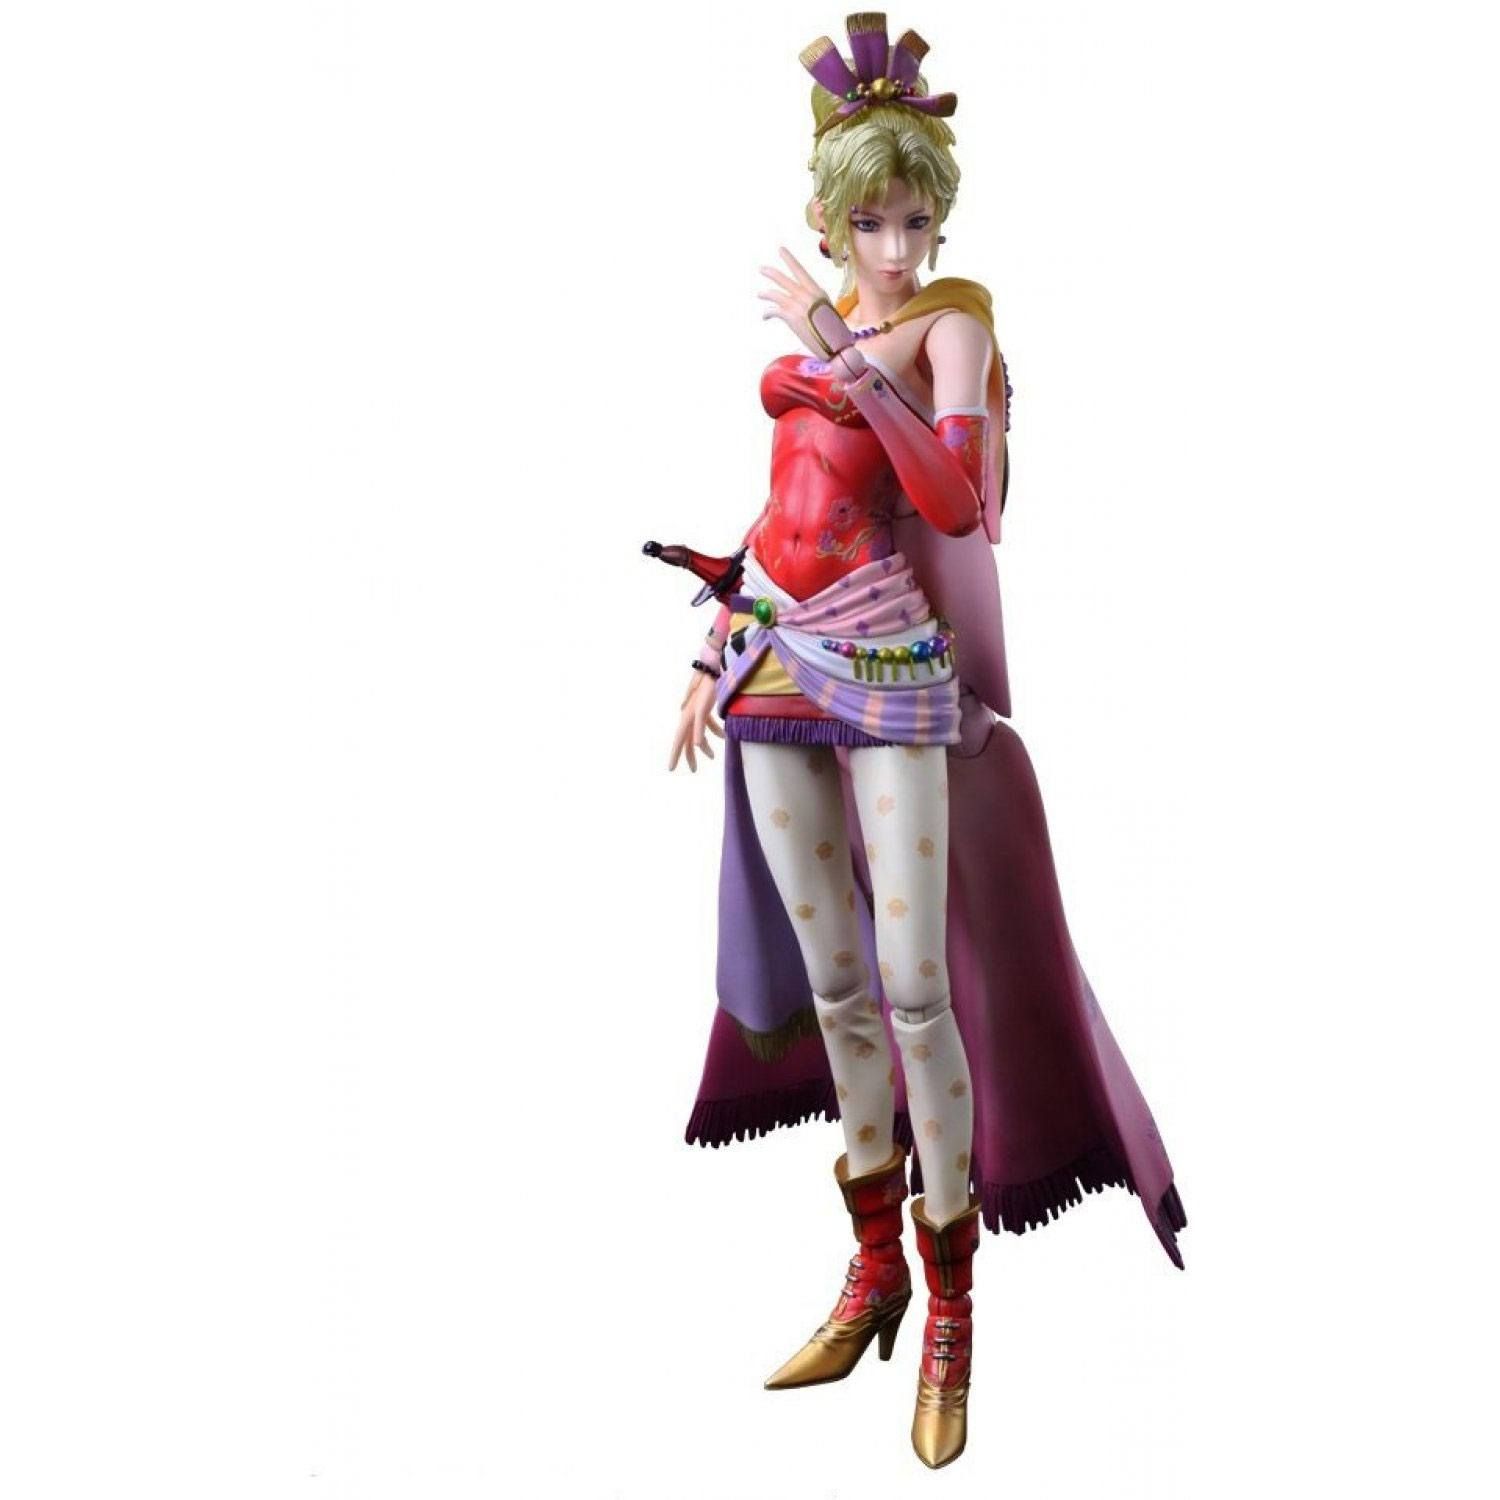 Dissidia Final Fantasy Play Arts Kai Akční Figure Terra Branford 25 cm Square-Enix